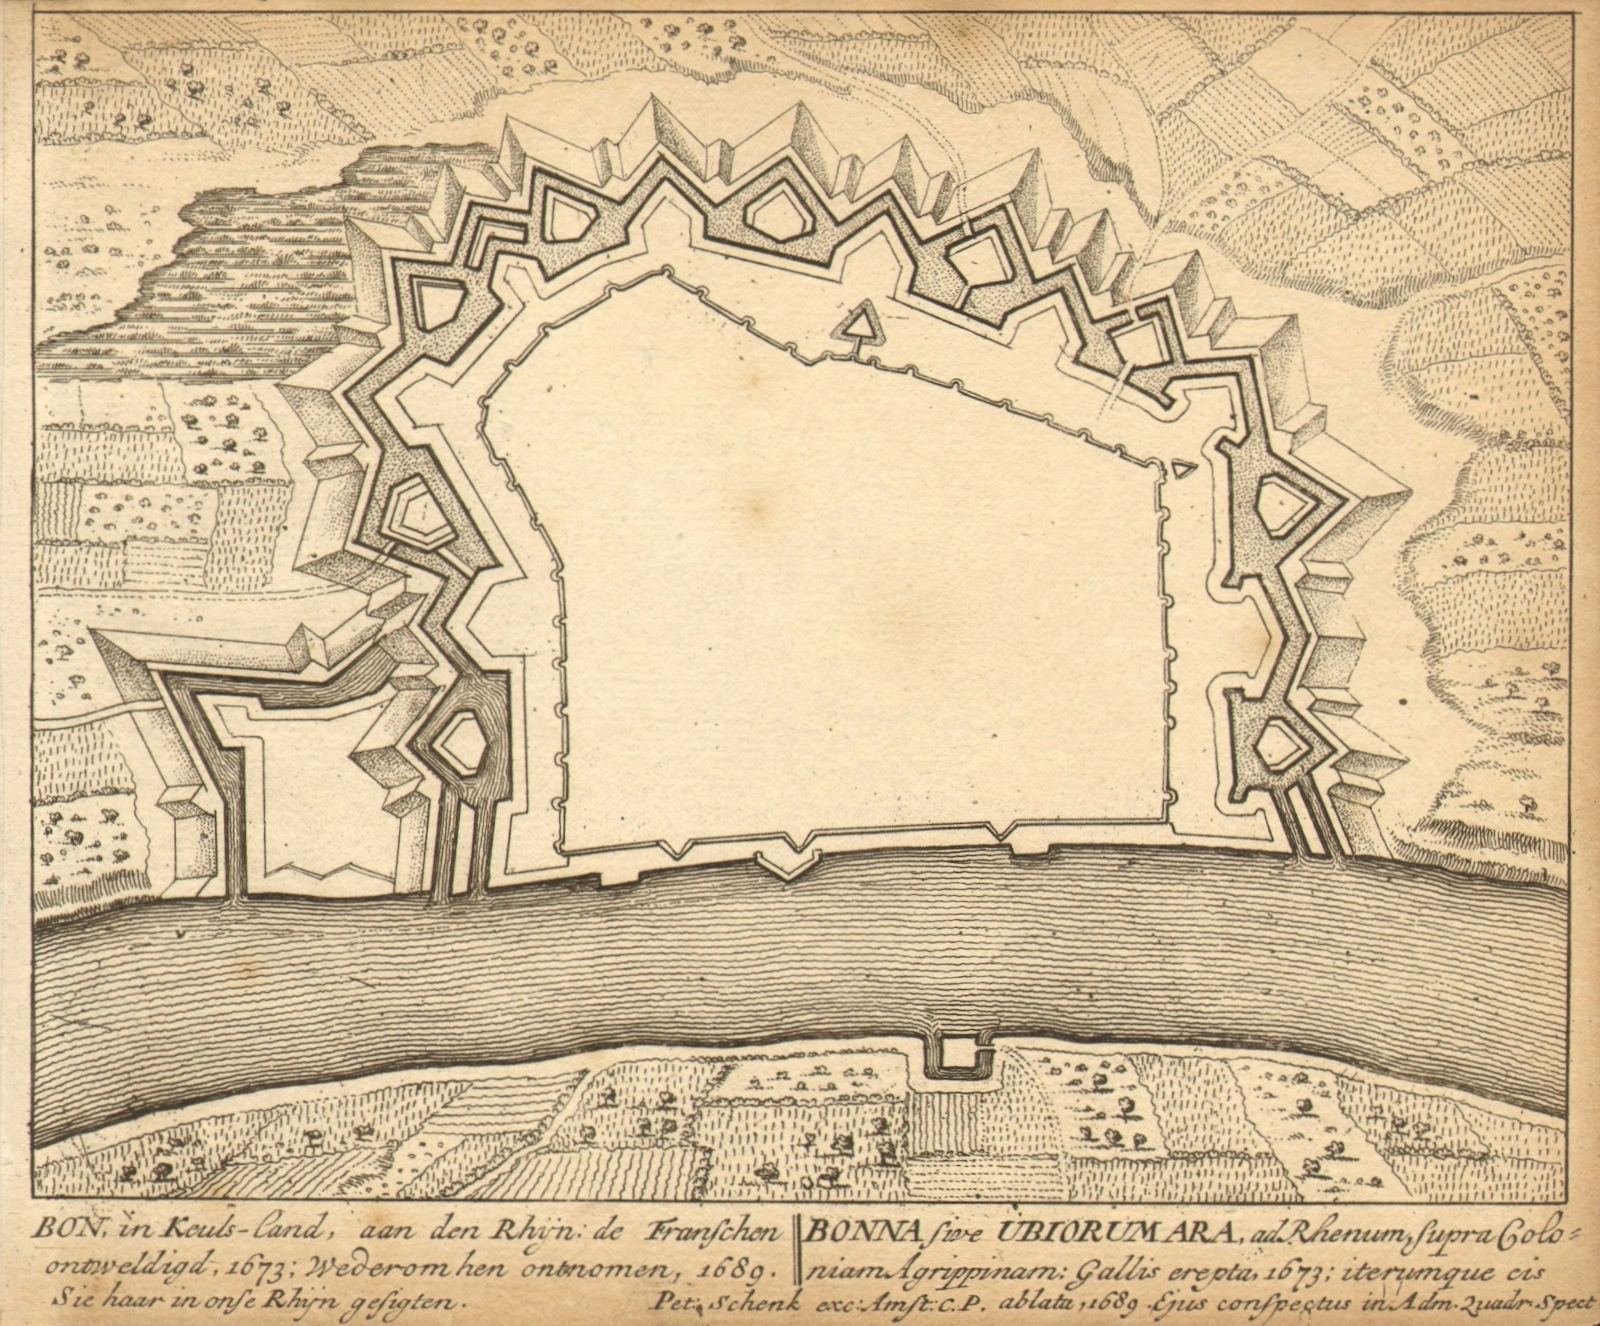 Associate Product BONN IBIORUMARA. Town Plan by Schenk. Scarce. Germany 1710 old antique map